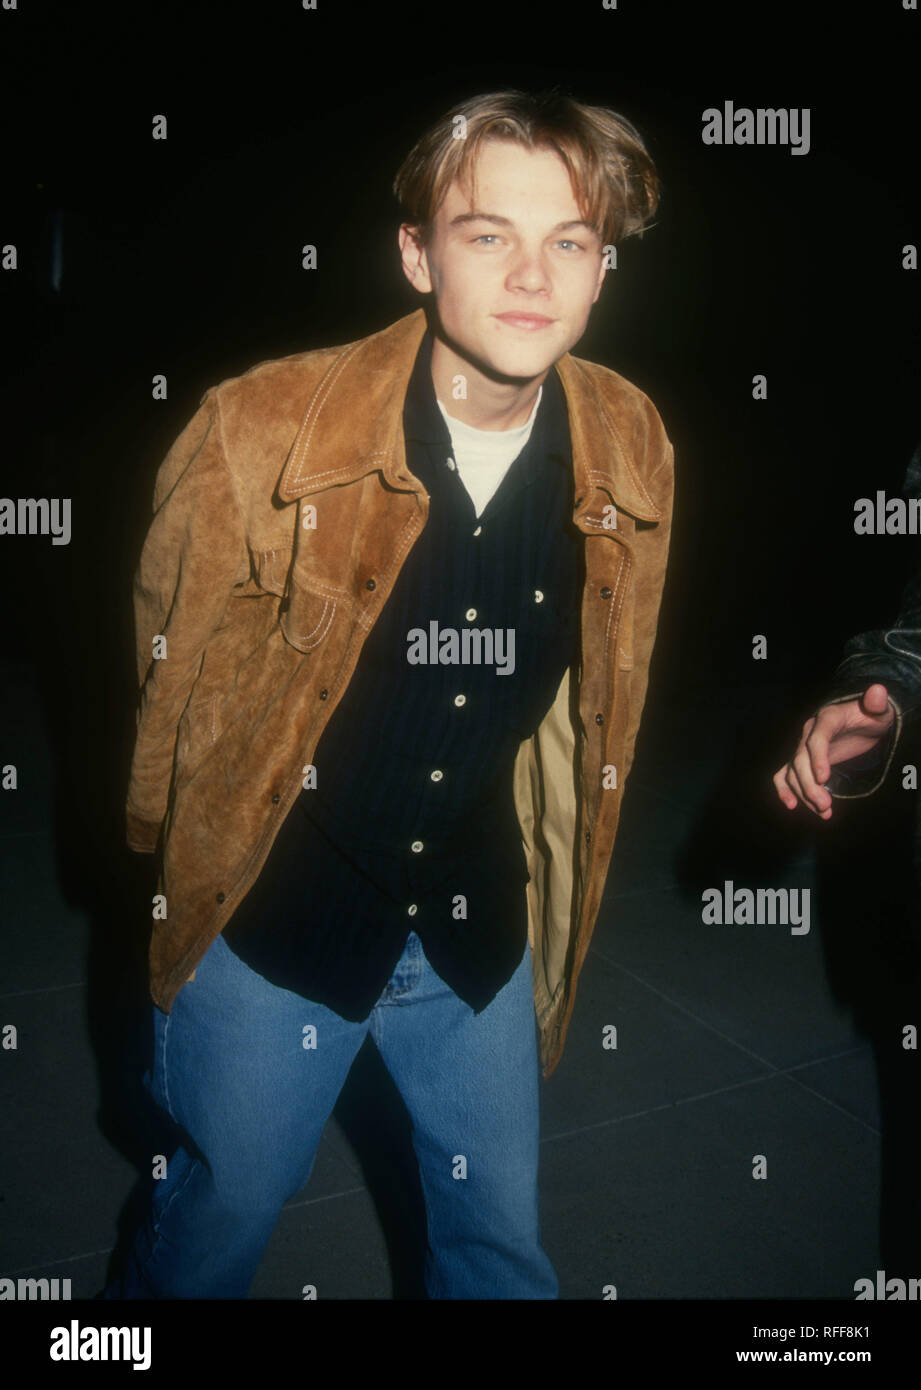 LOS ANGELES, Ca - 9. NOVEMBER: Schauspieler Leonardo DiCaprio nimmt an Universal Pictures' "Carlito's Way" Premiere am 9. November 1993 in der Director's Guild Theater in Los Angeles, Kalifornien. Foto von Barry King/Alamy Stock Foto Stockfoto